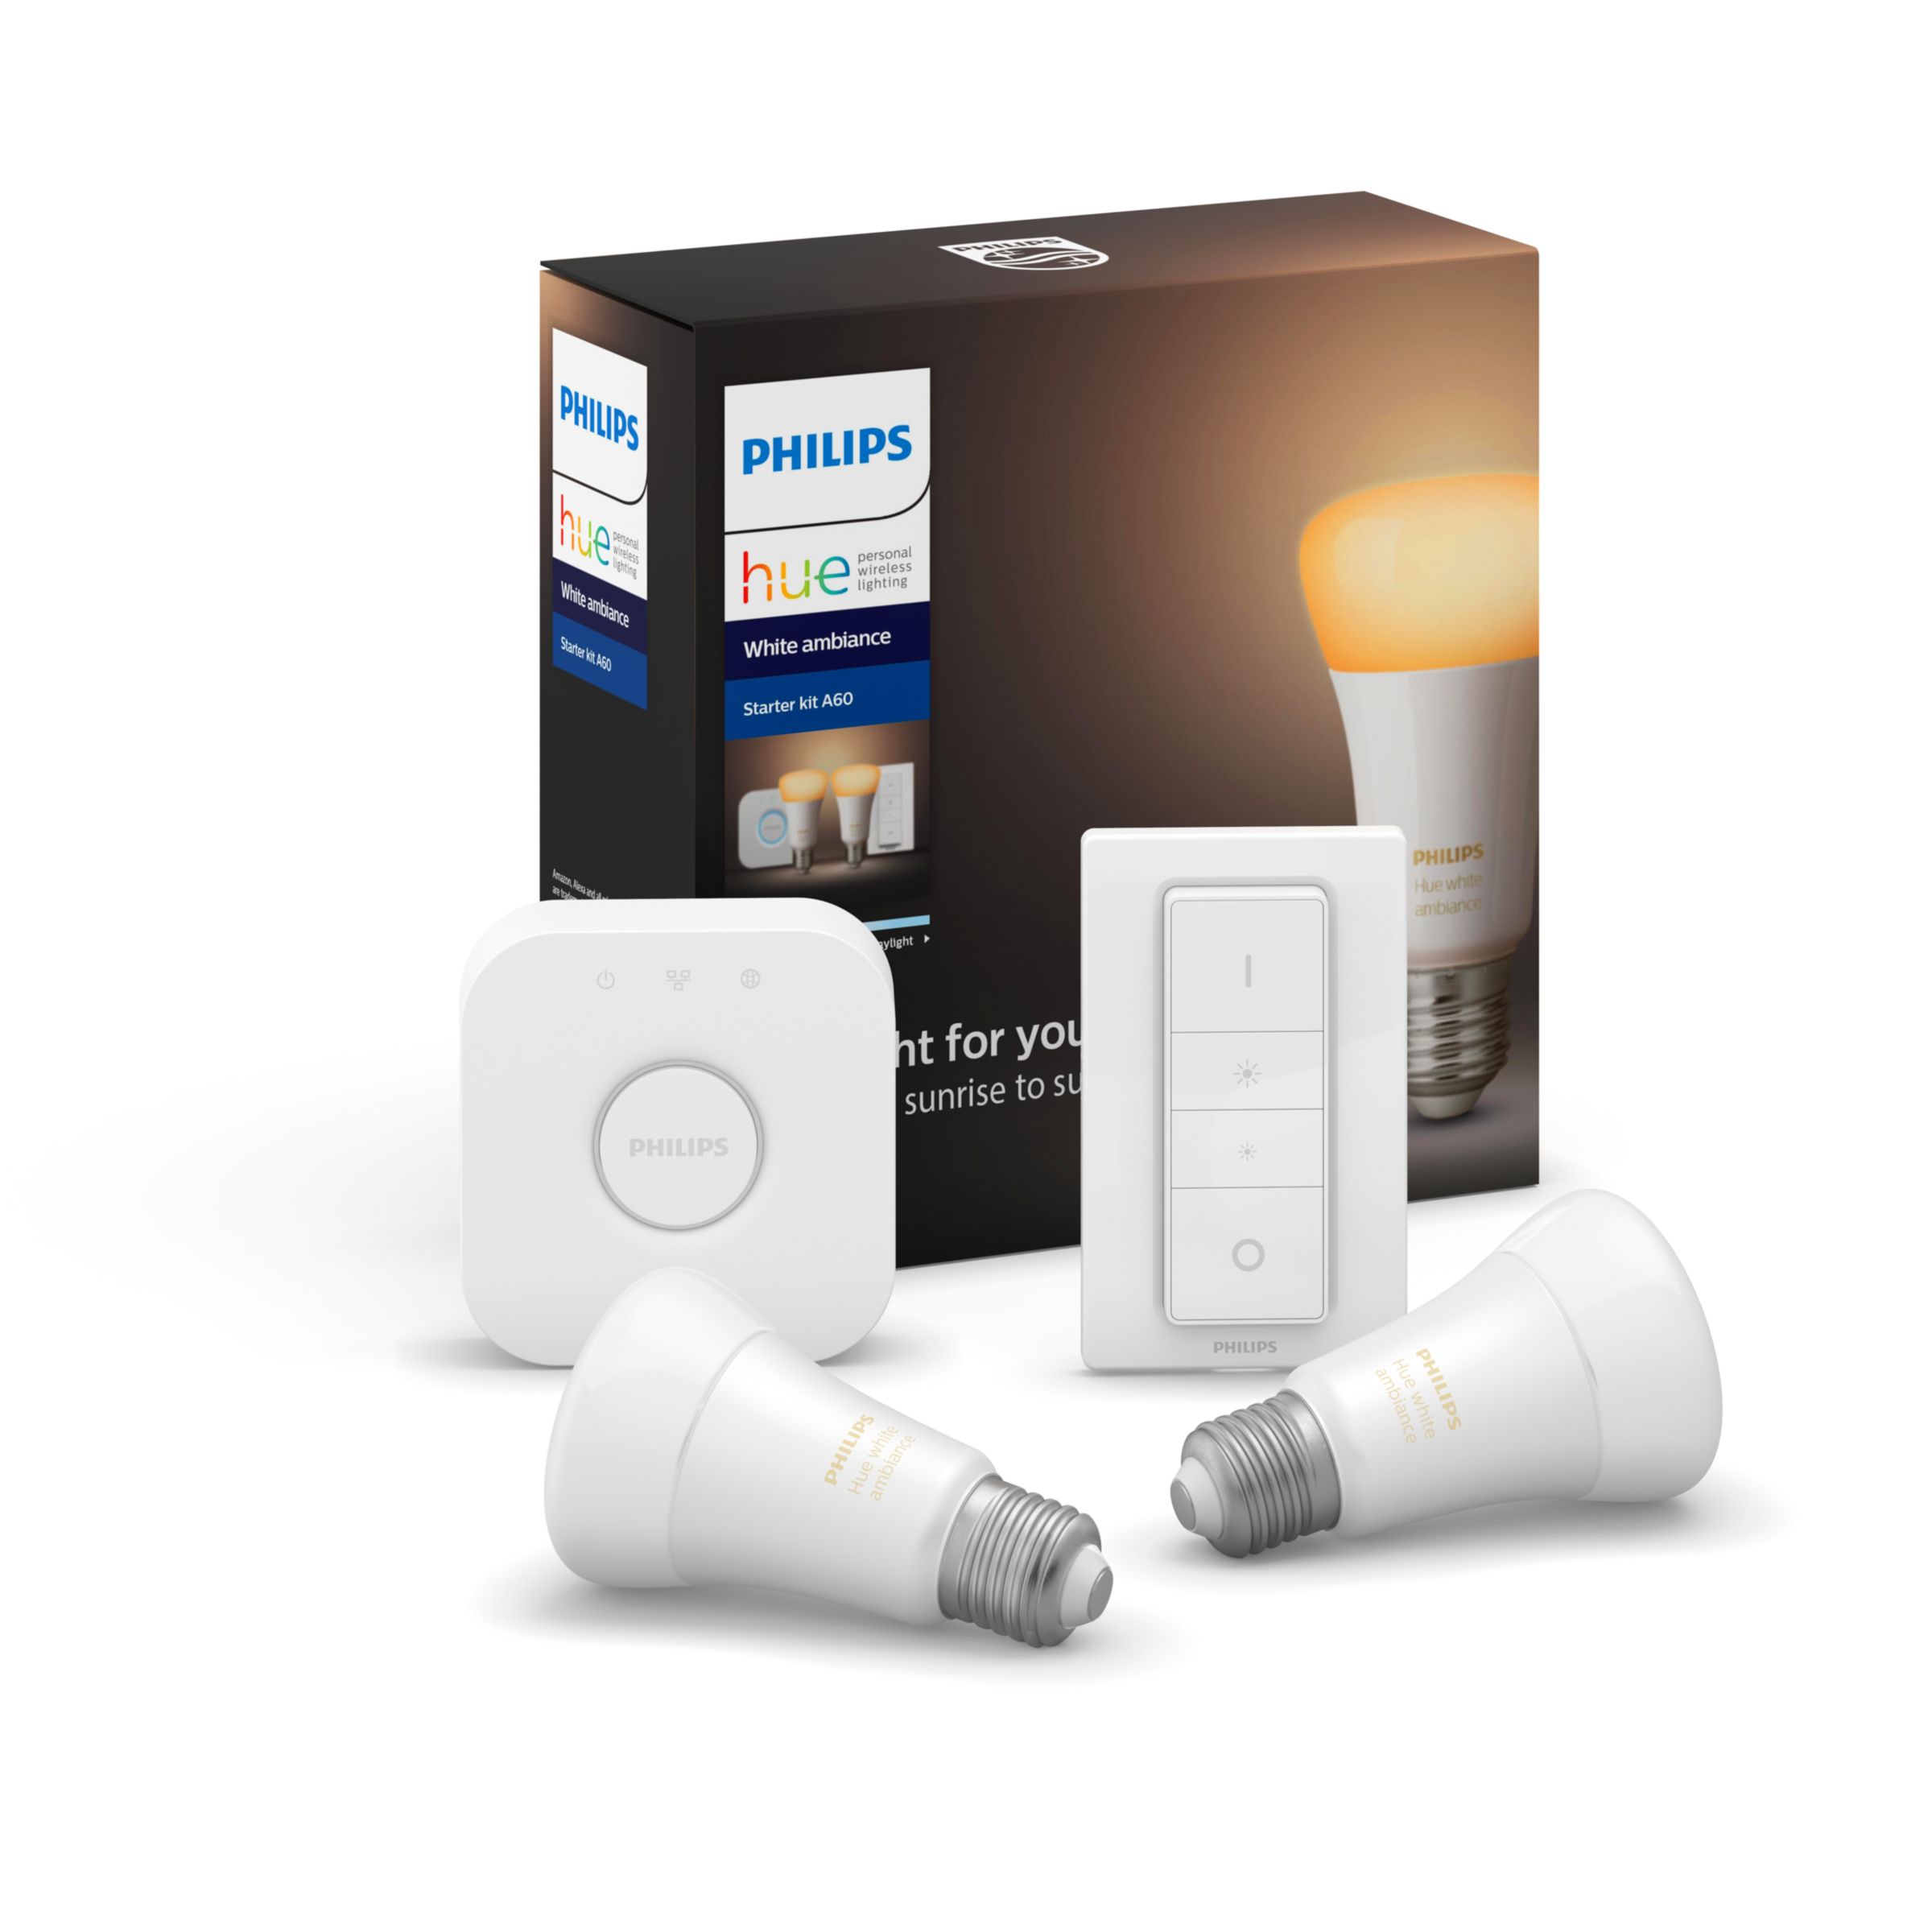 Kneden Is aan het huilen visie Hue White ambiance Starter kit: 2 E27 smart bulbs (800) + dimmer switch | Philips  Hue MY